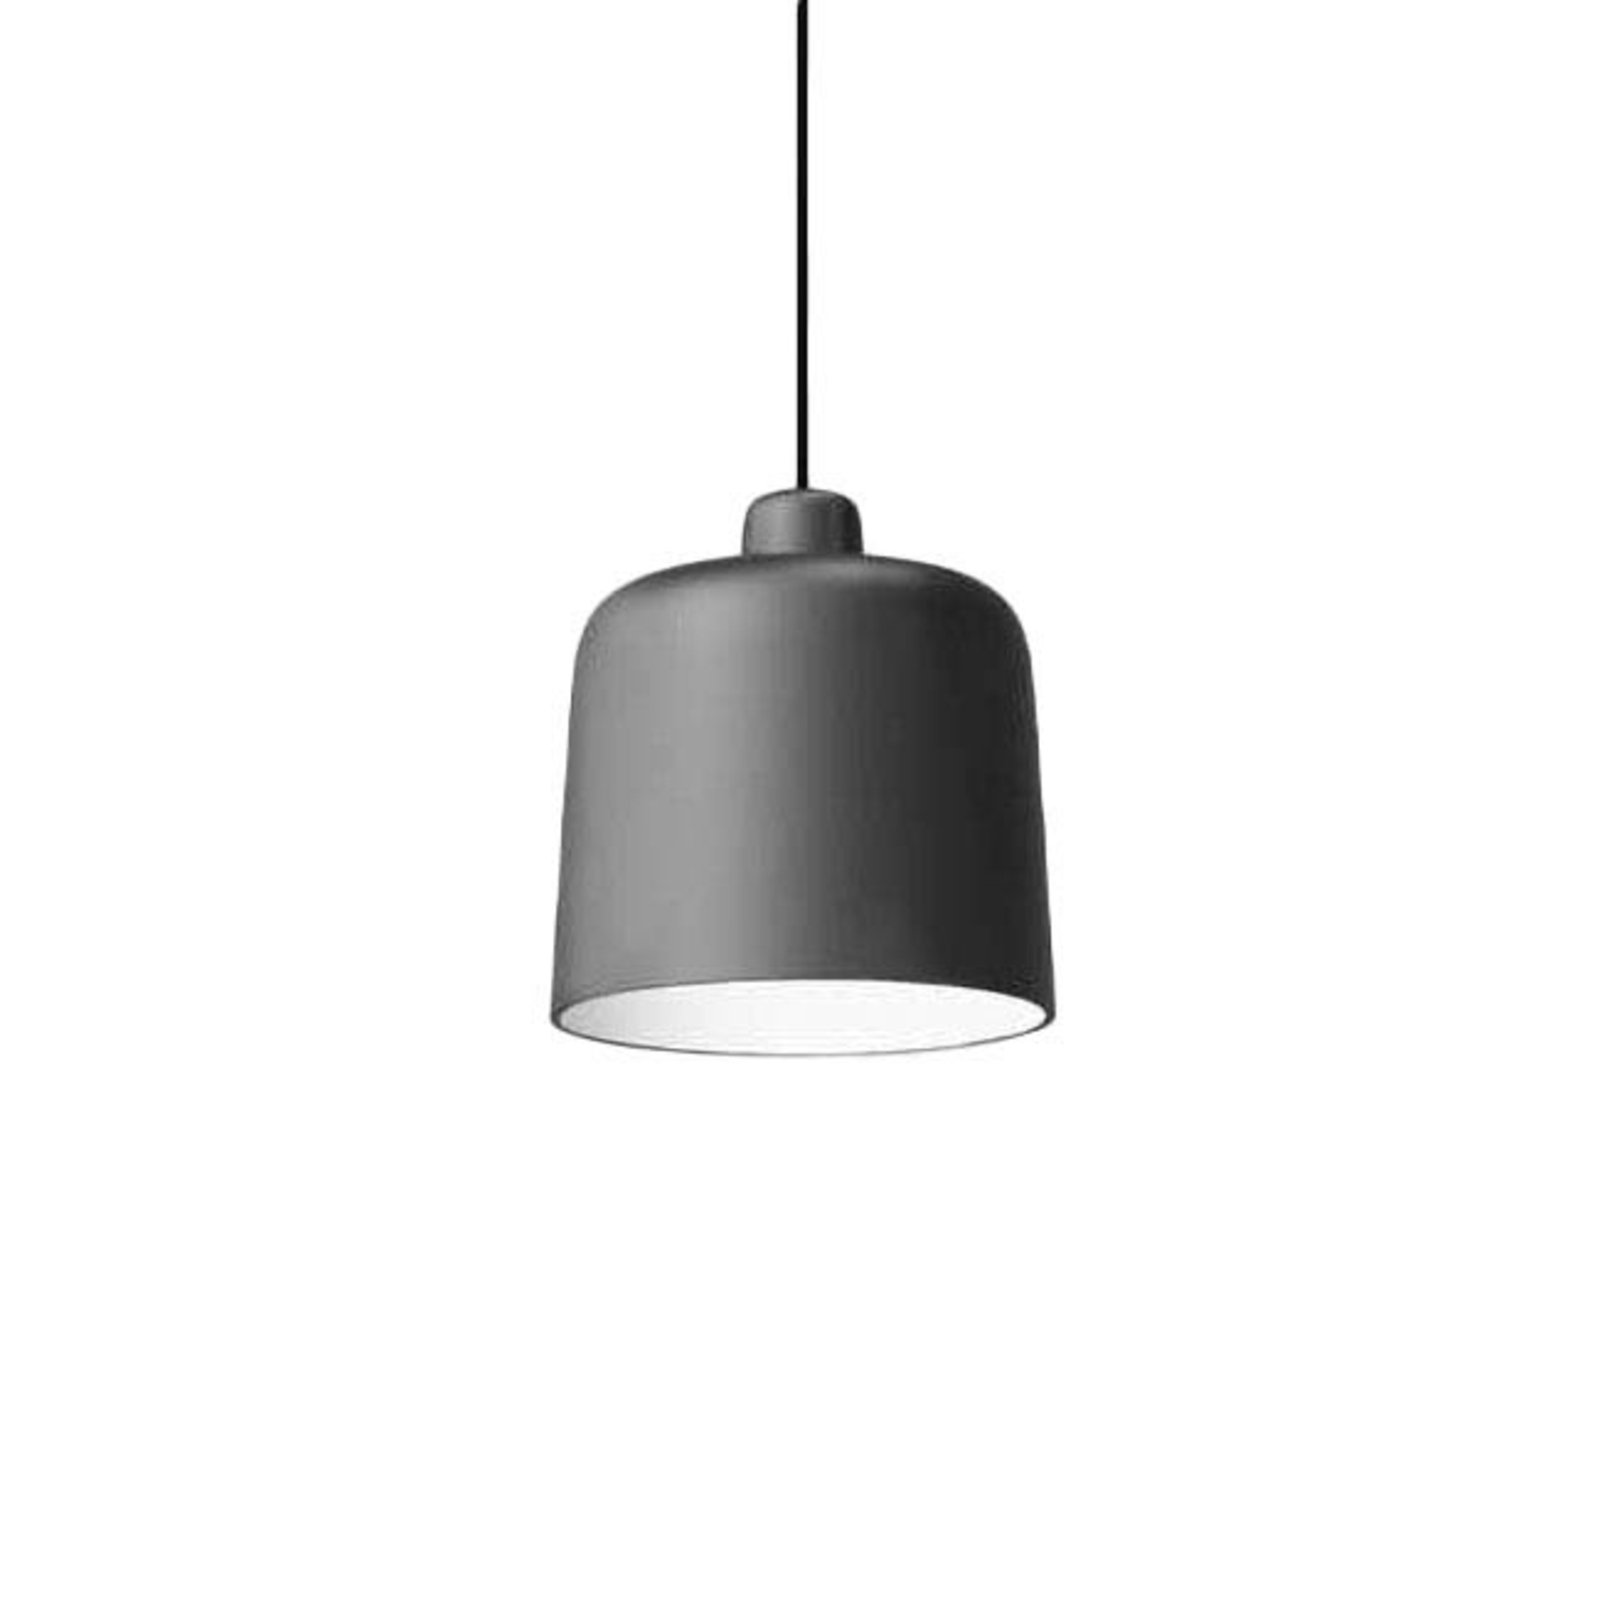 Lampa wisząca Luceplan Zile czarny mat, Ø 20 cm